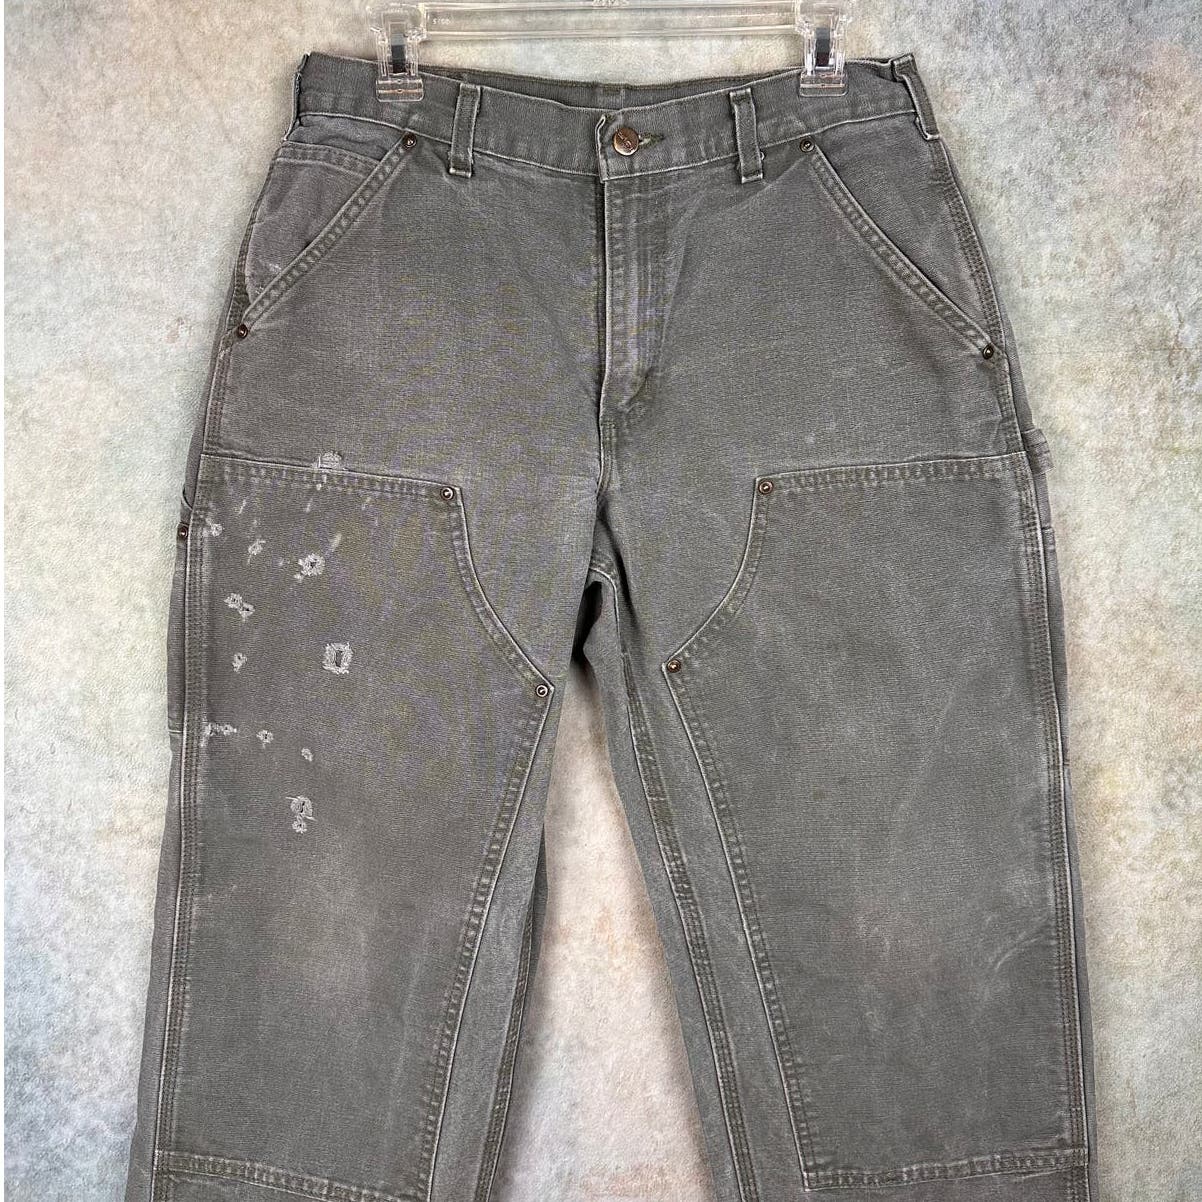 Vintage Carhartt Double Knee Work Wear Pants 32x30